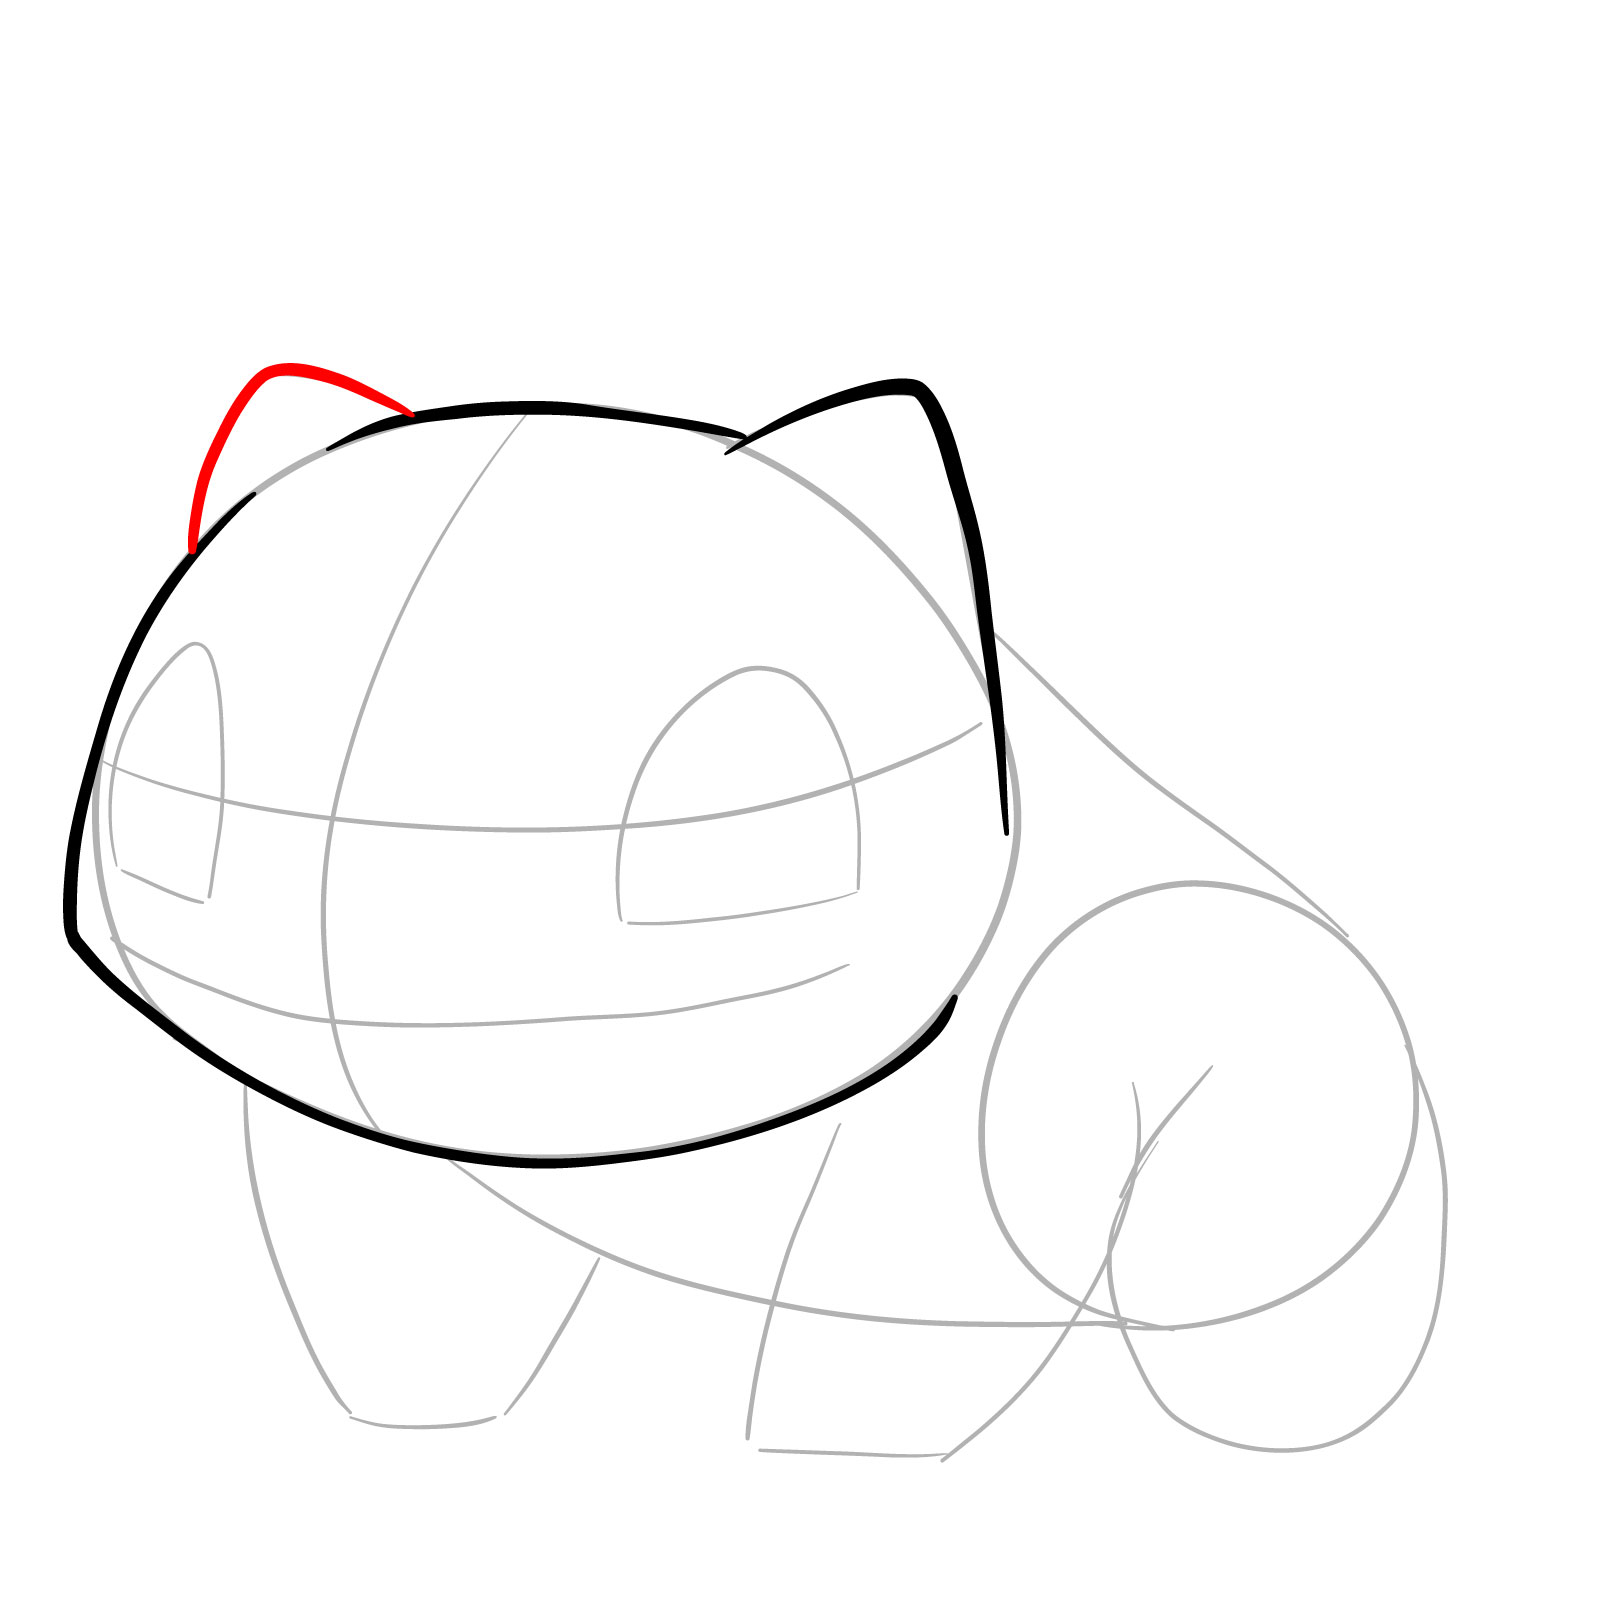 How to draw Bulbasaur - step 06